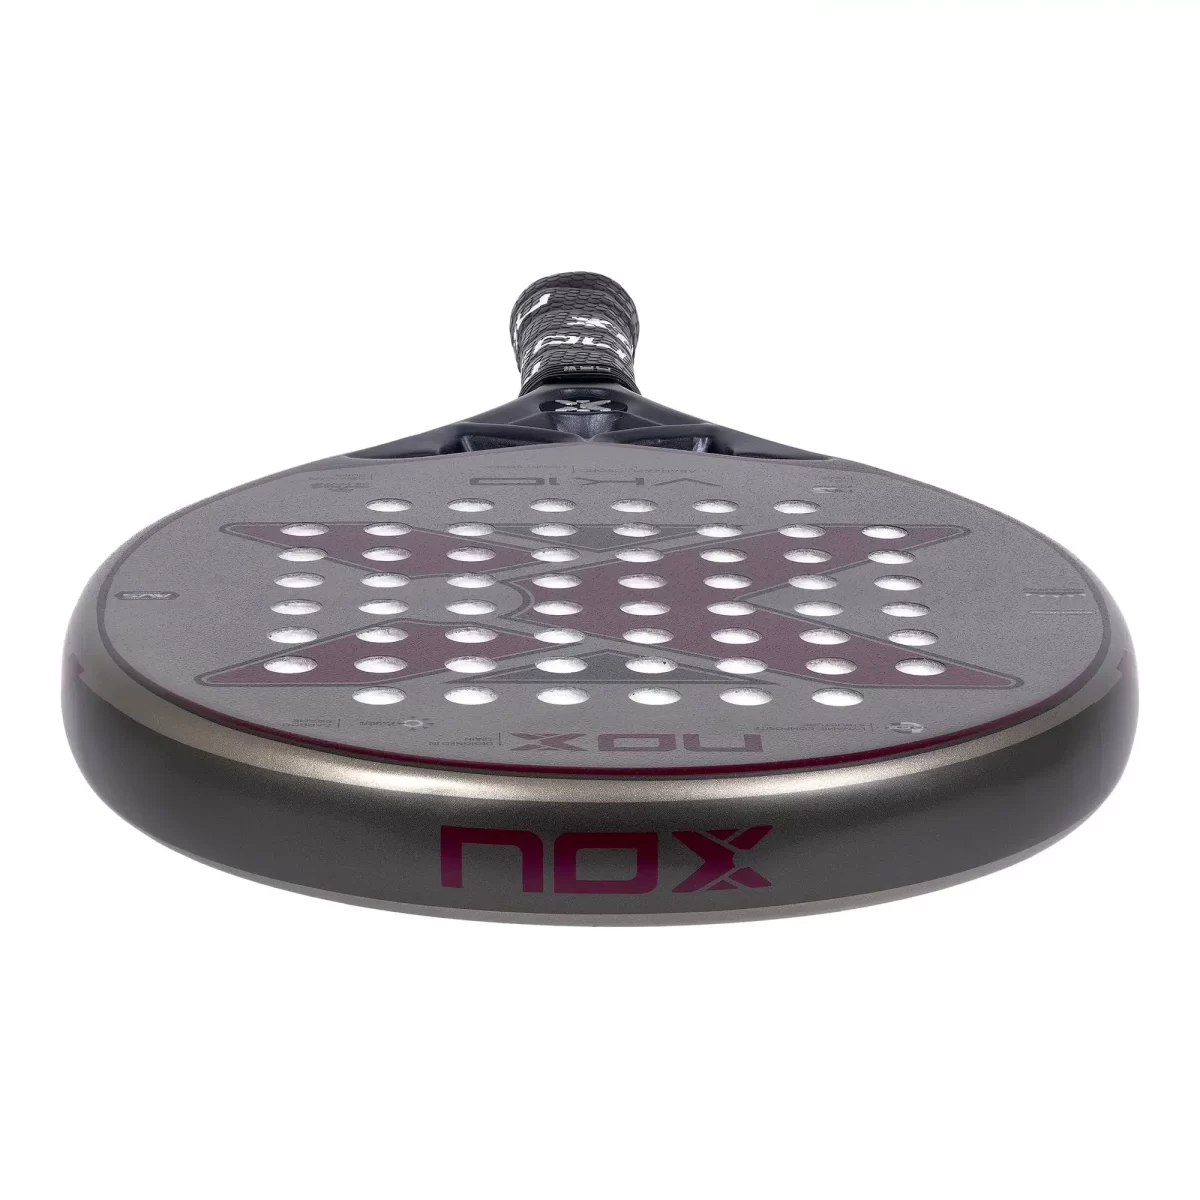 NOX Padel Racket VK10 Luxury The Racket Of Aranzazu Osoro 5